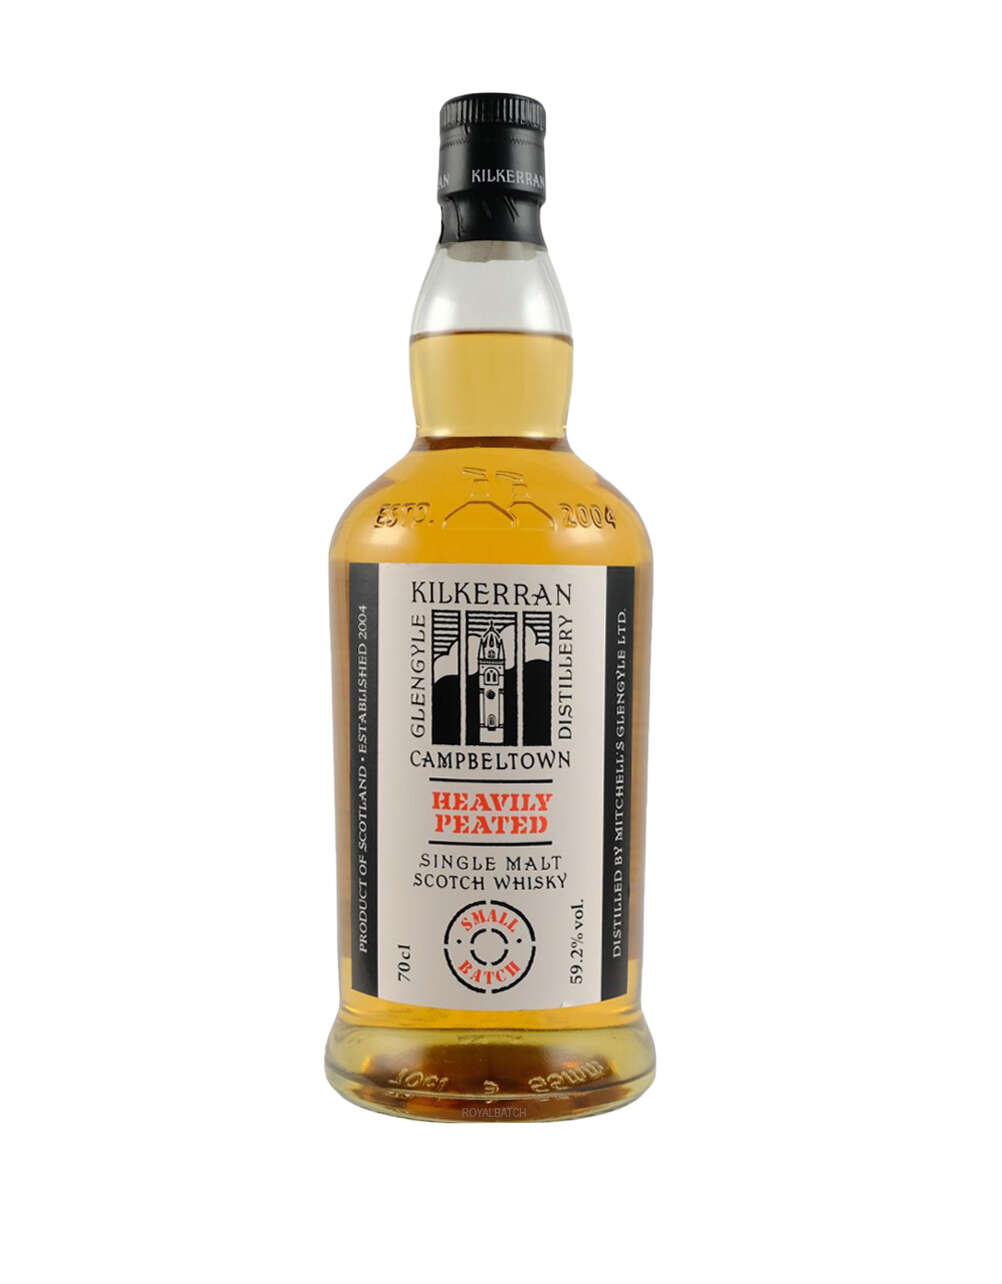 Kilkerran Campbeltown Heavily Peated Batch 9 Single Malt Scotch Whisky